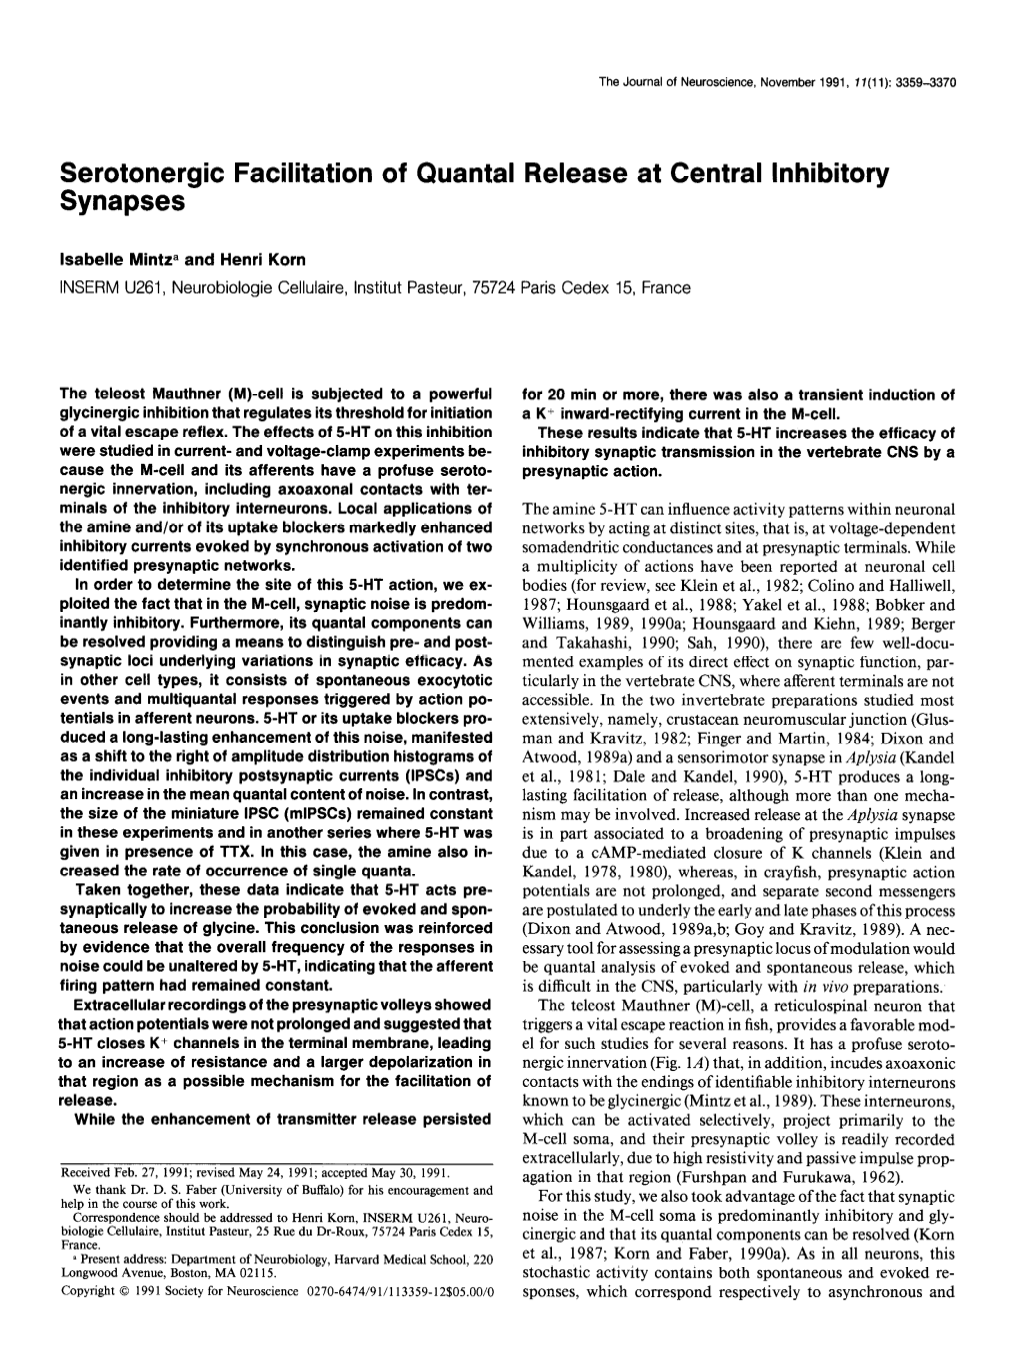 Serotonergic Facilitation of Quanta1 Release at Central Inhibitory Synapses